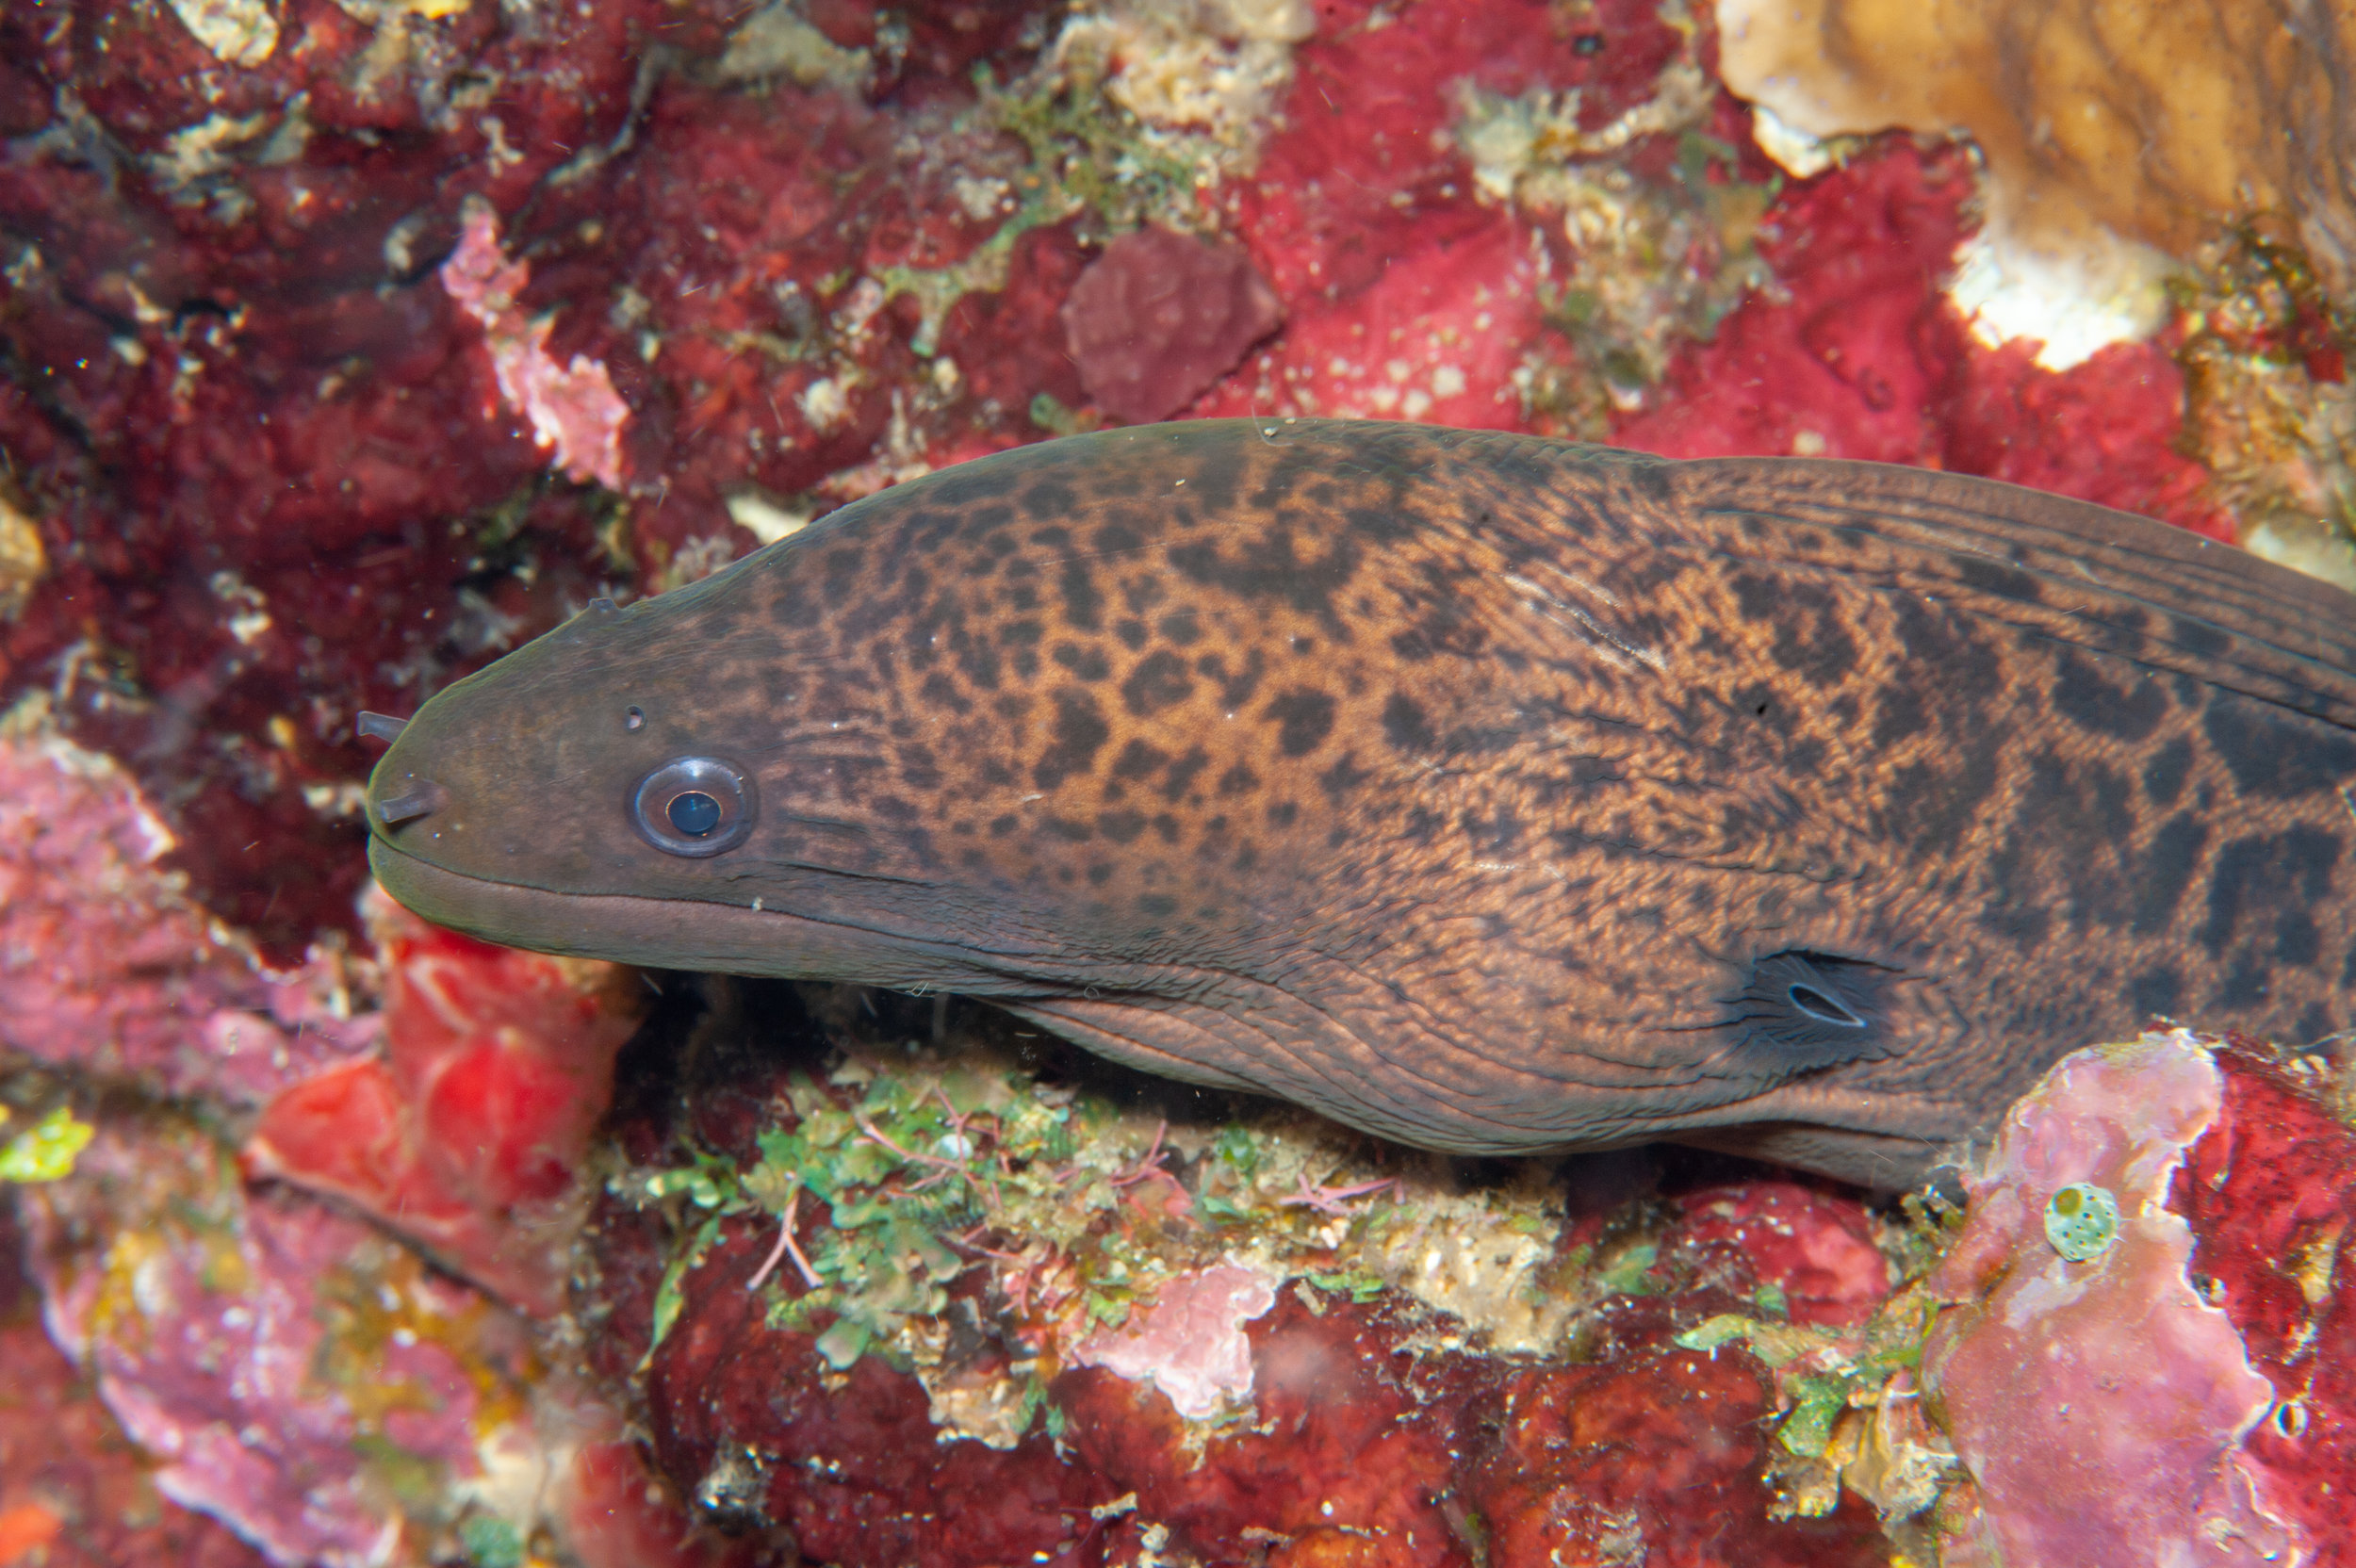 Giant moray eel - Gymnothorax javanicus, Ake's Reef, Father's Reefs